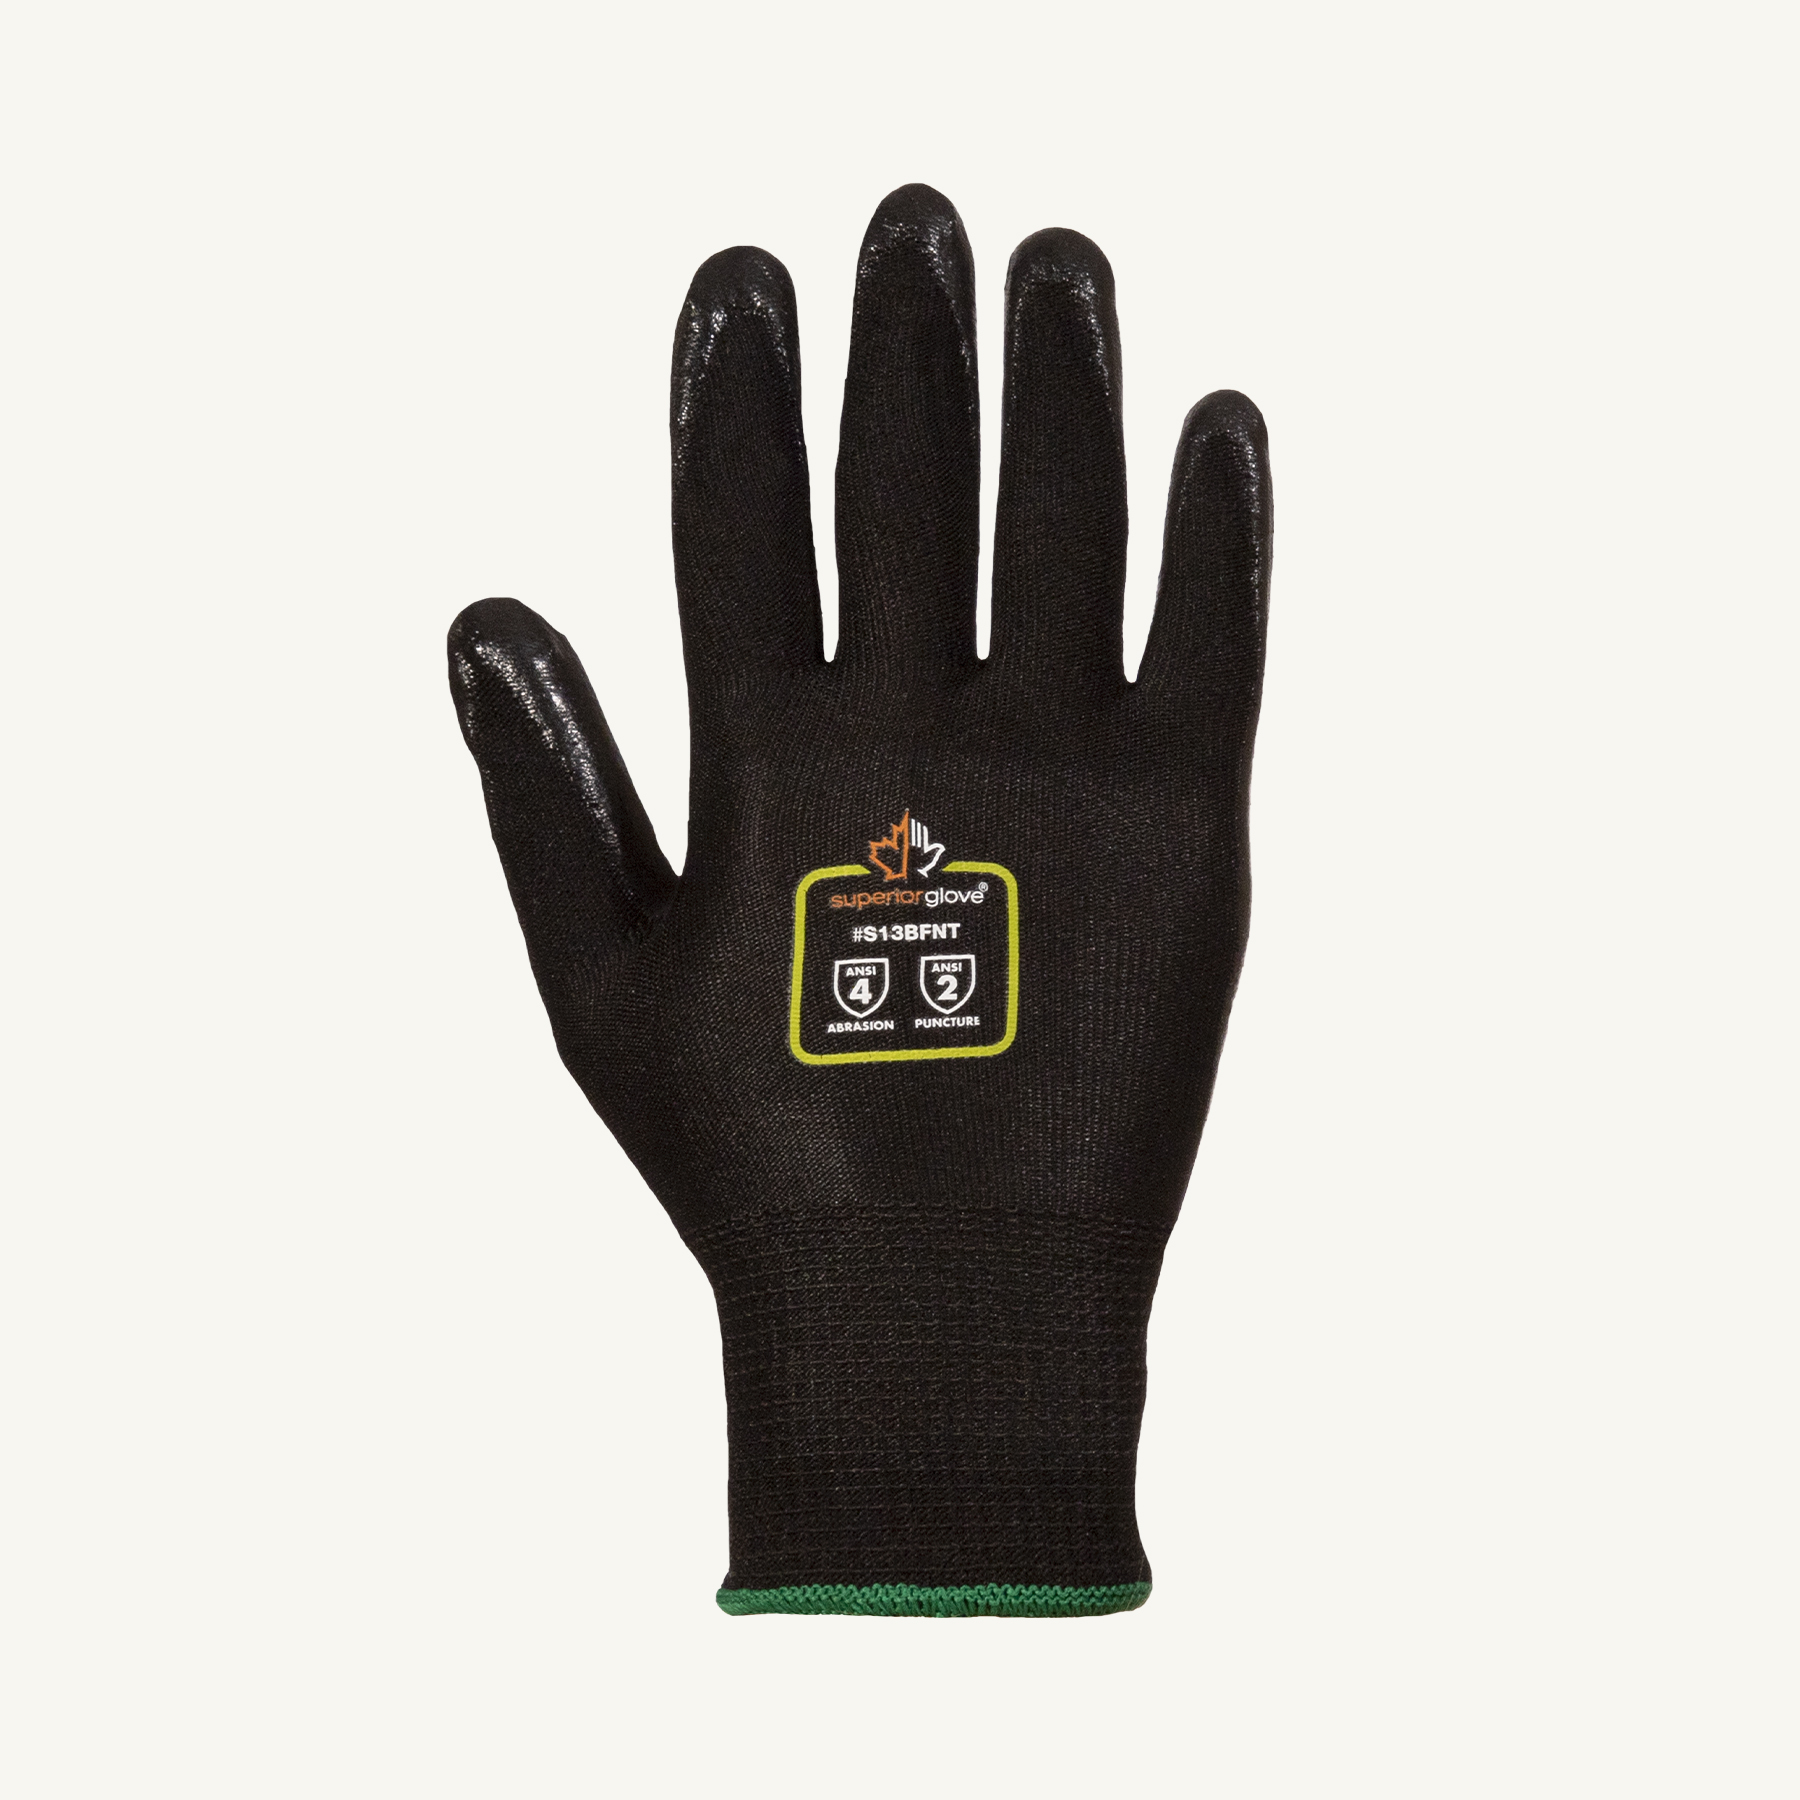 #S13BFNT Superior Glove® Dexterity® 13-gauge Foam Nitrile-Dipped Work Gloves